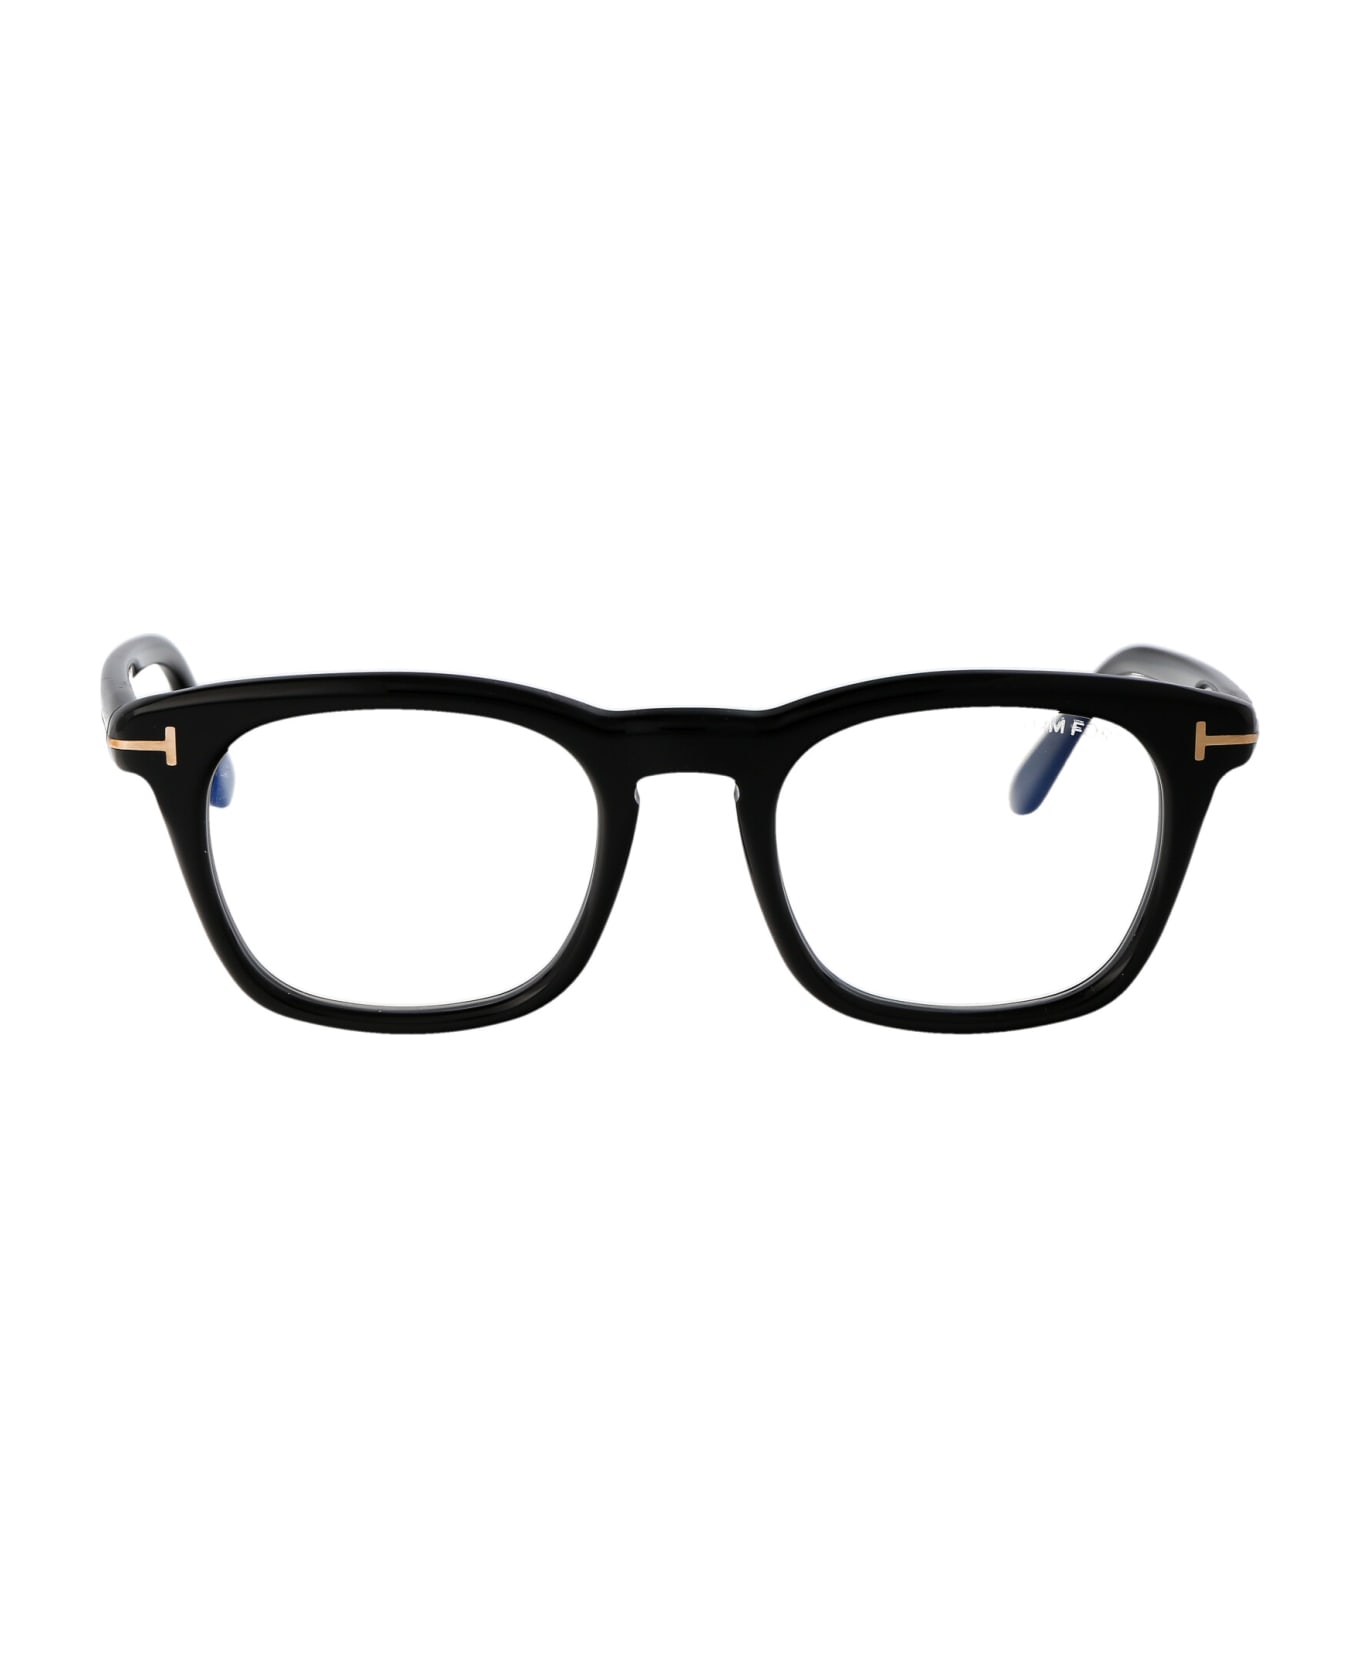 Tom Ford Eyewear Ft5870-b Glasses - 001 Nero Lucido